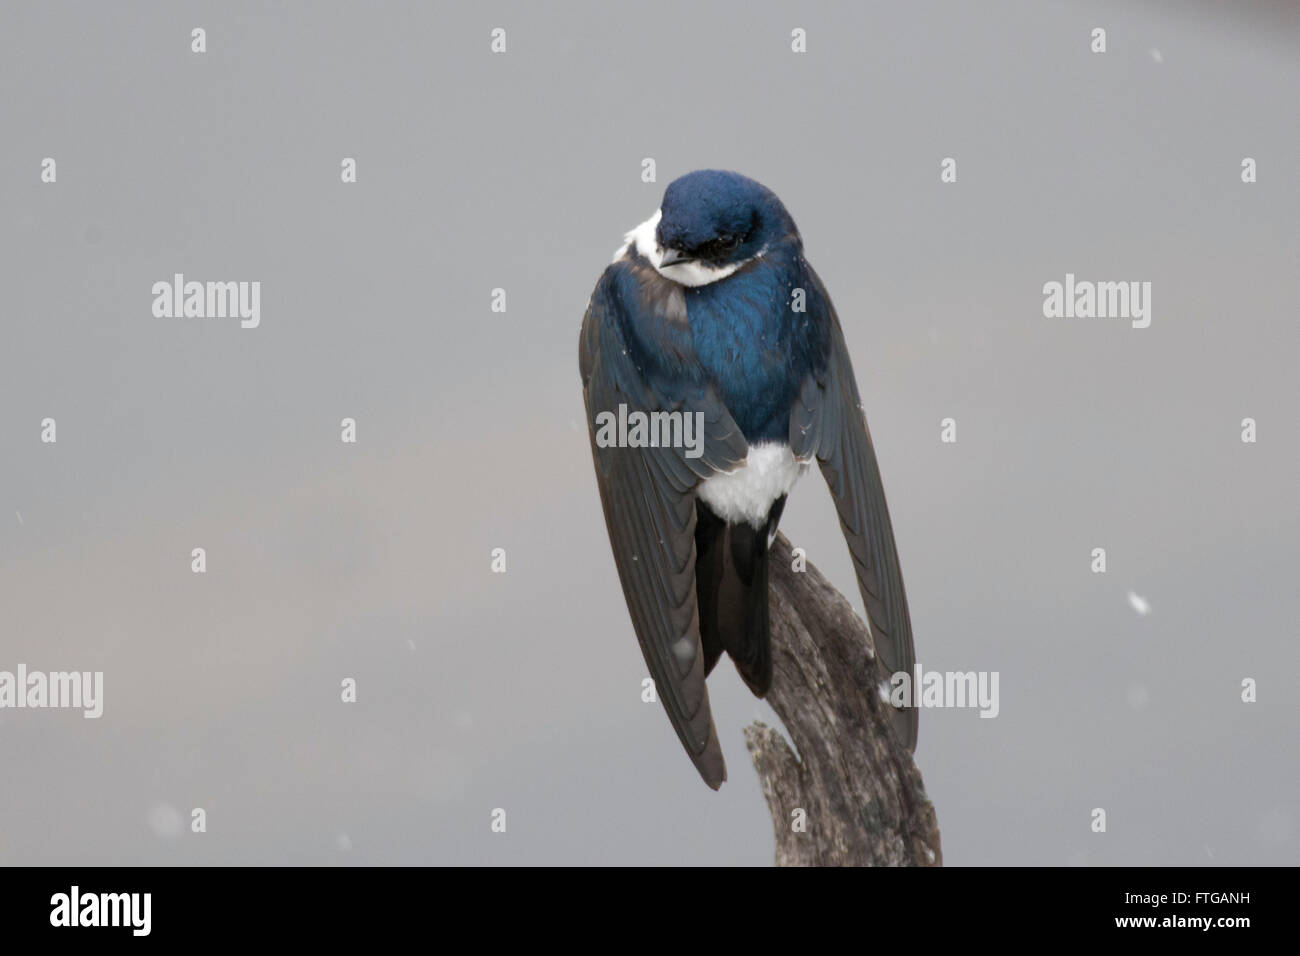 a chilean swallow (scientific name tachycineta meyeni) on a branch Stock Photo